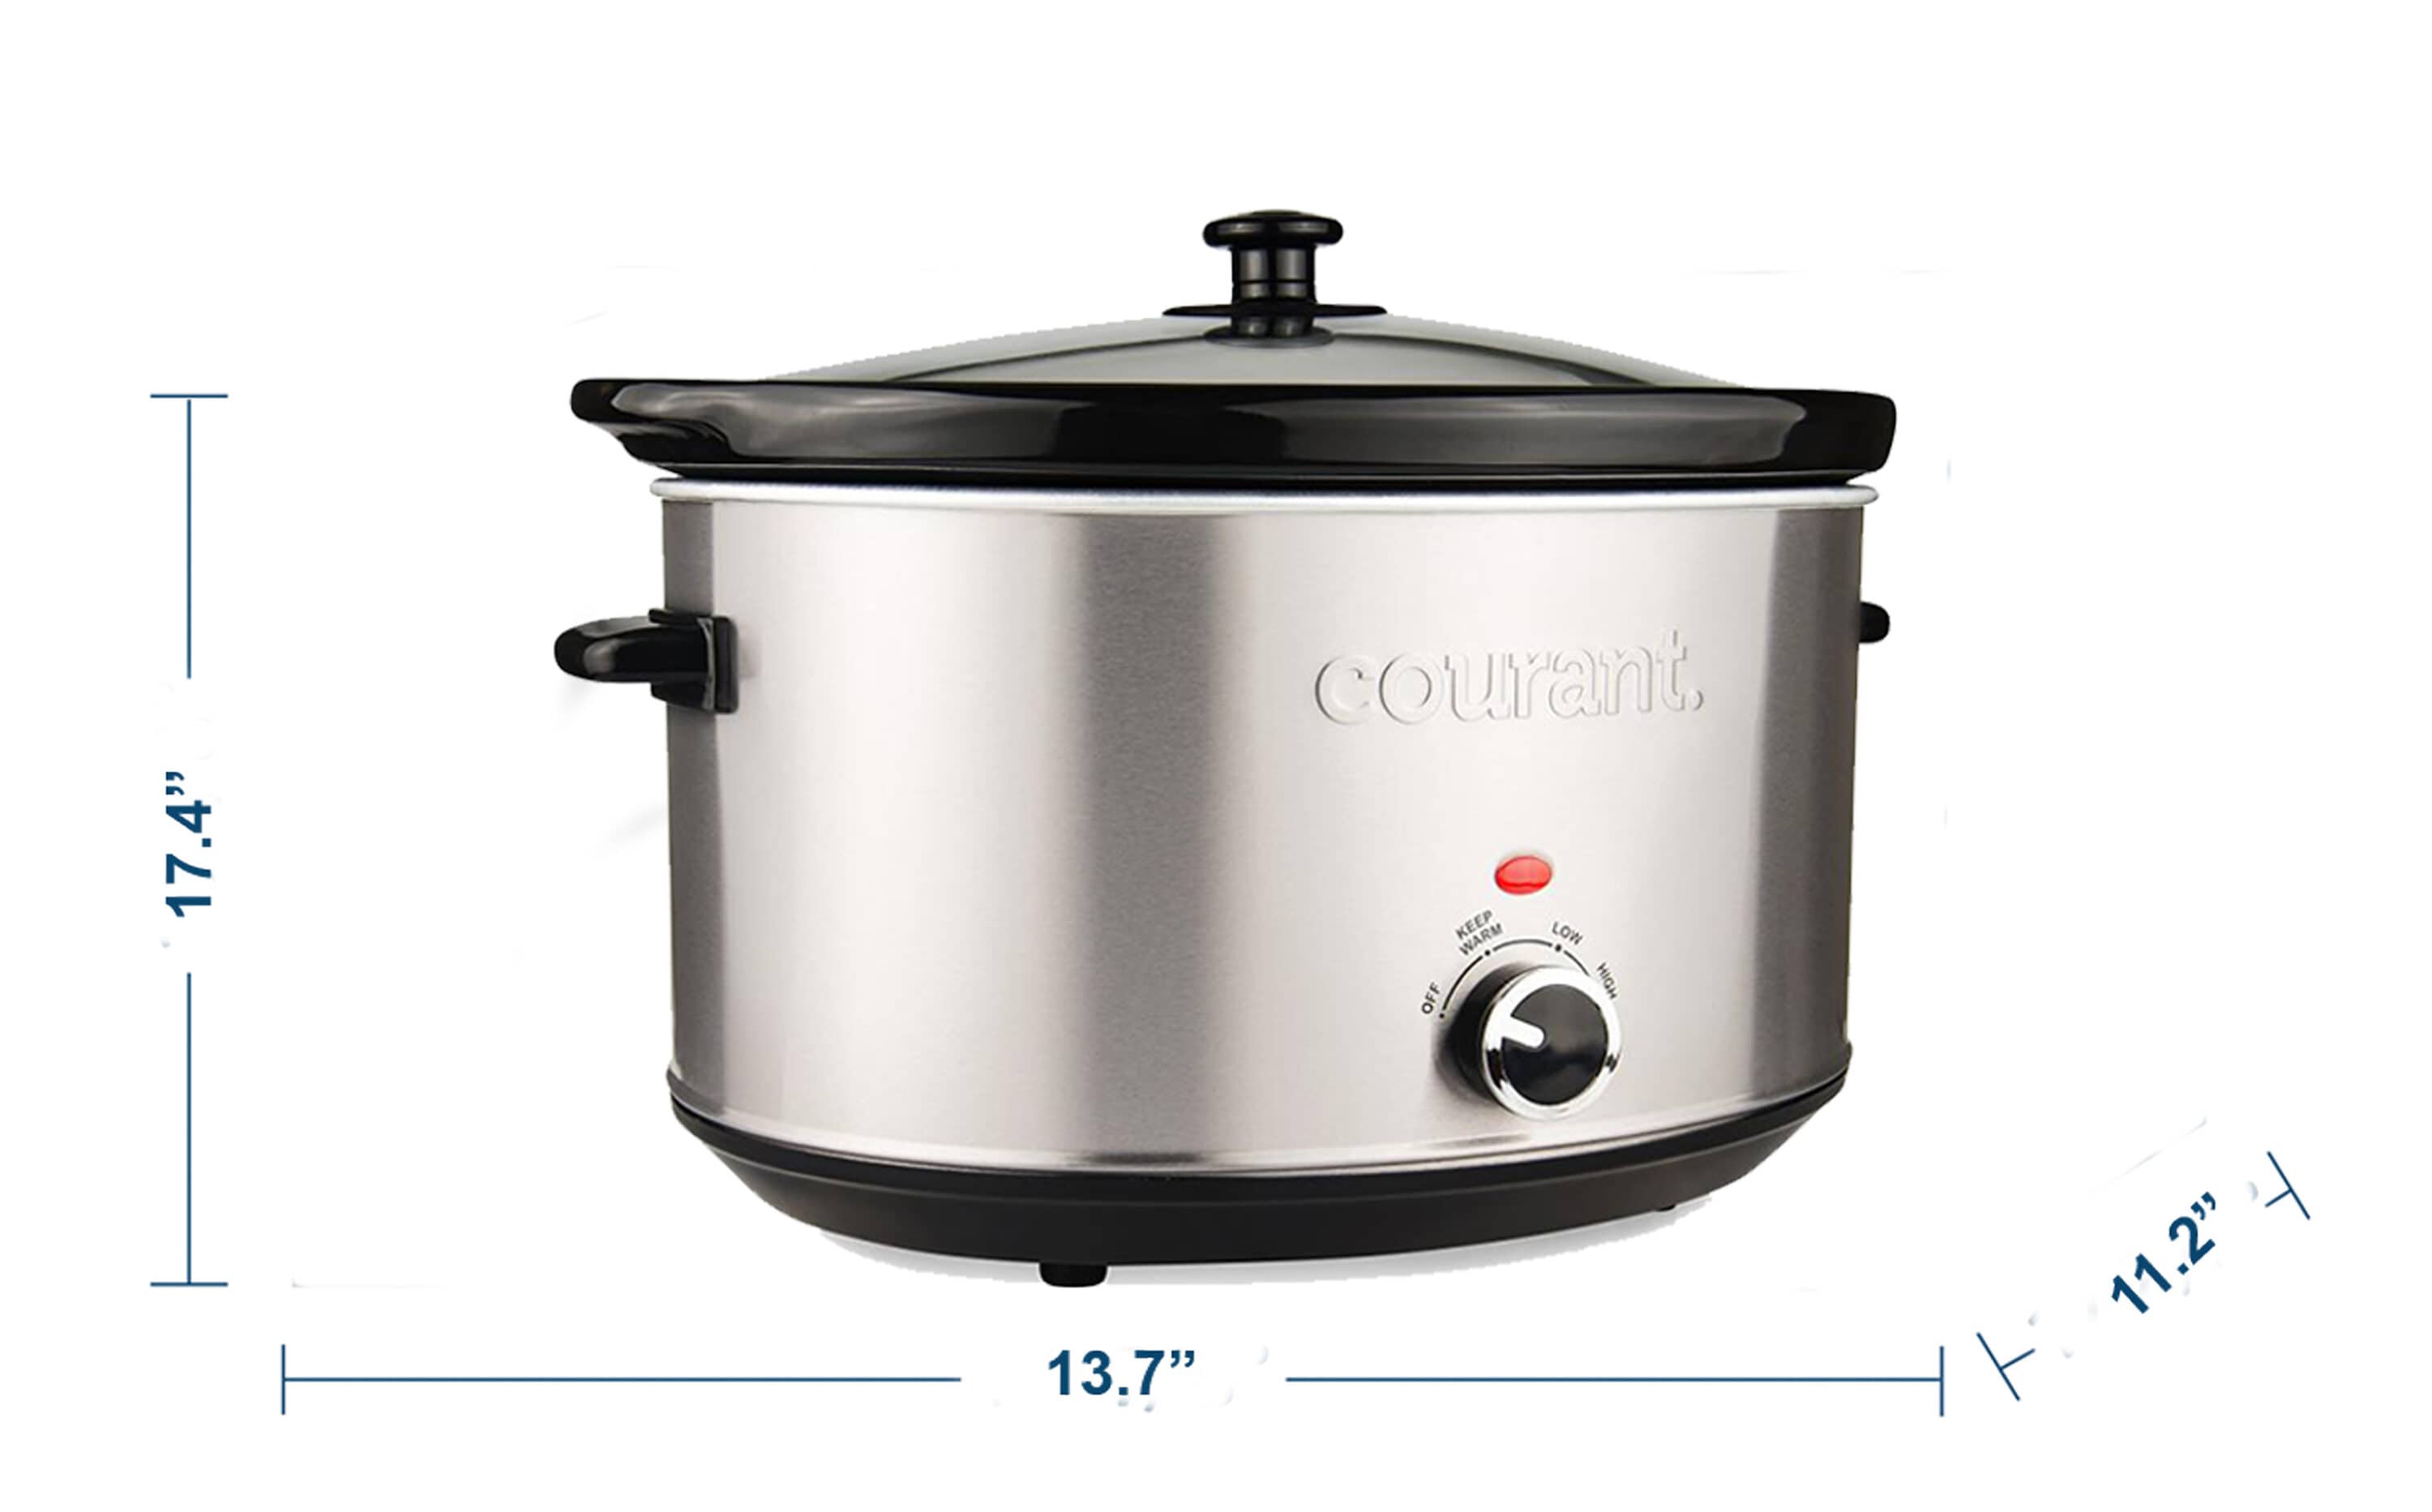 Courant 5 QT (2.5QT Each Pot) Double Slow Cooker - Stainless Steel